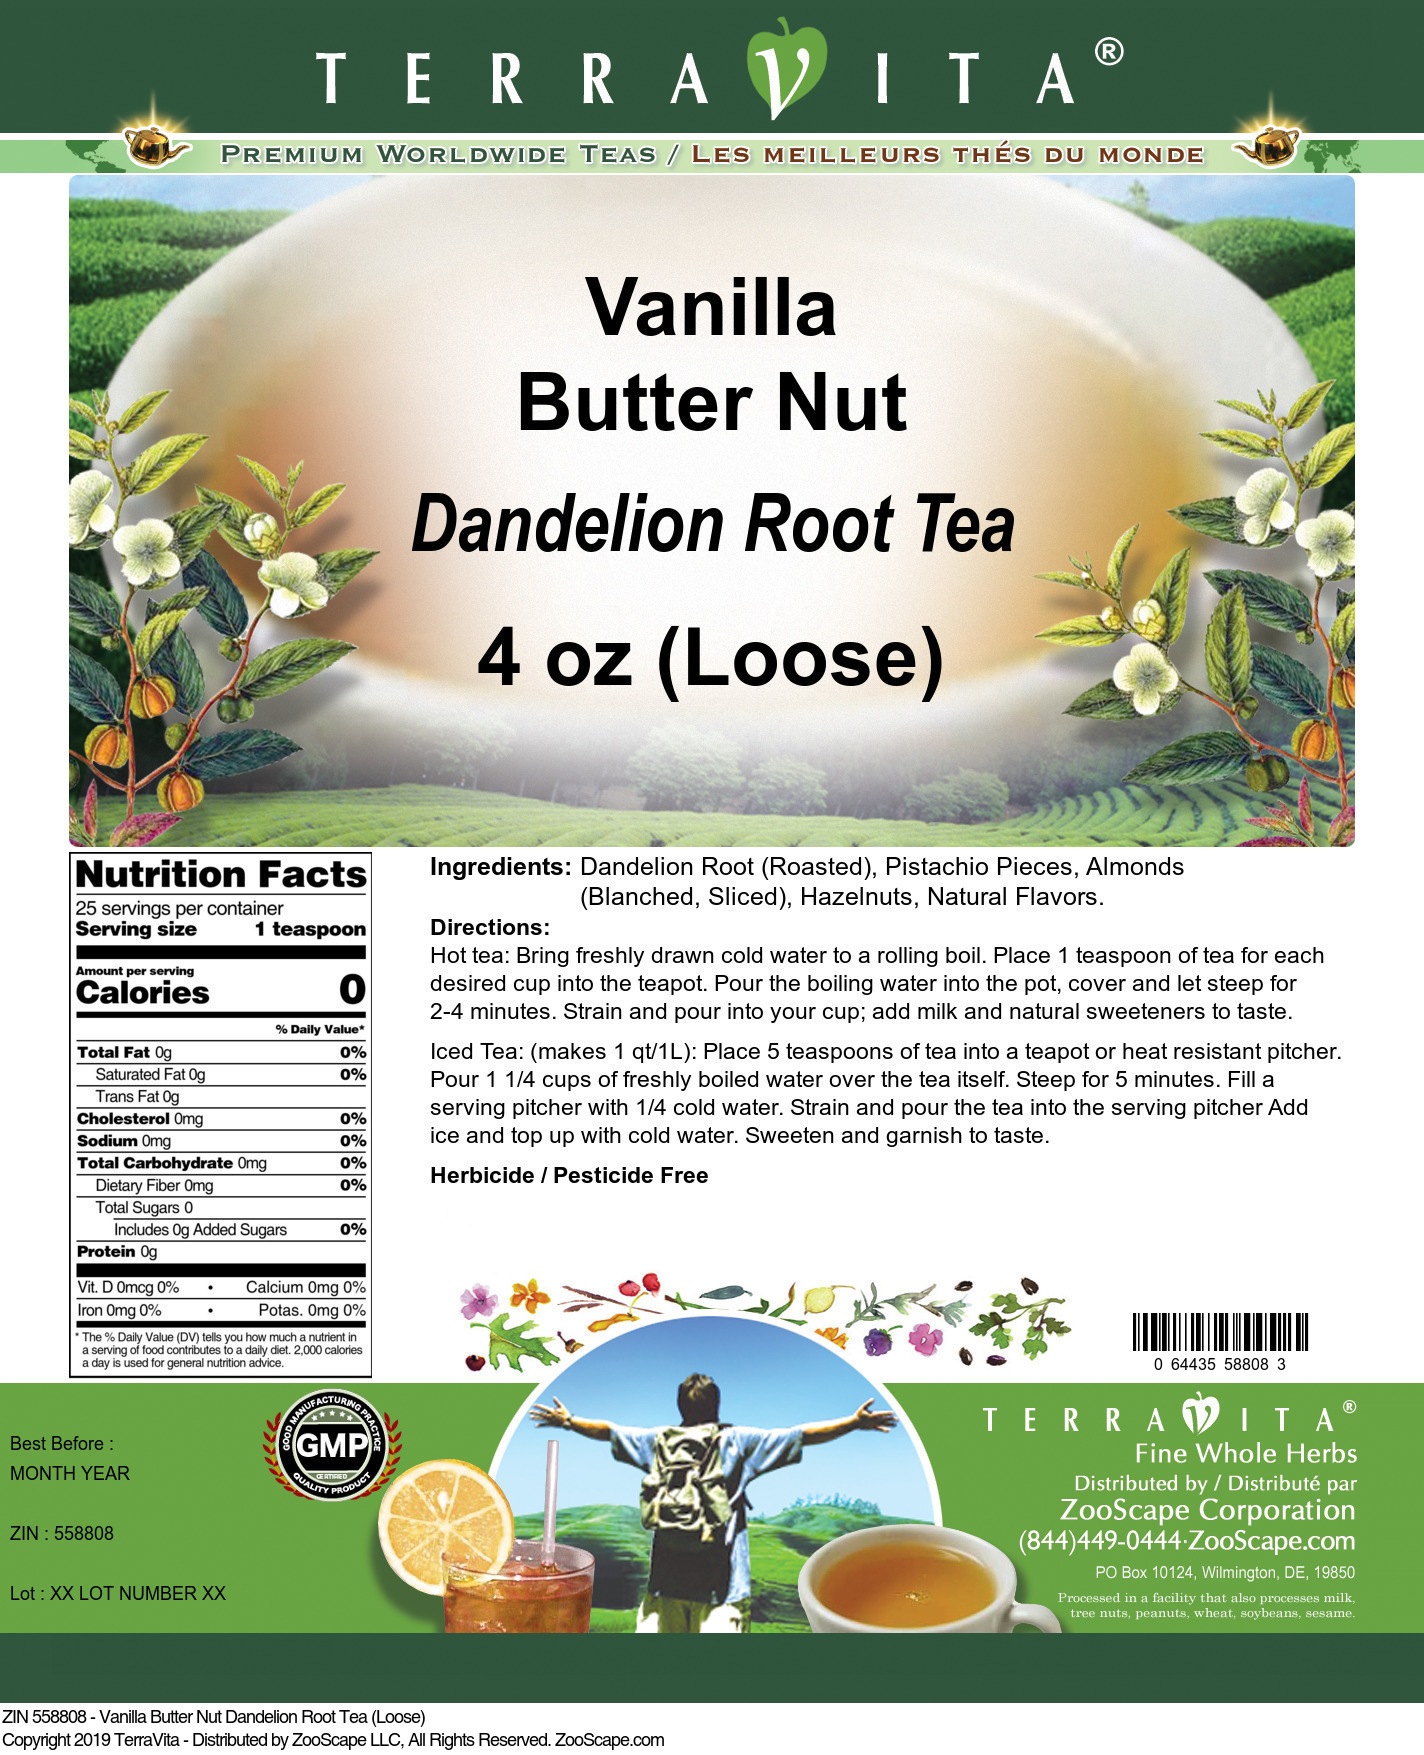 Vanilla Butter Nut Dandelion Root Tea (Loose) - Label